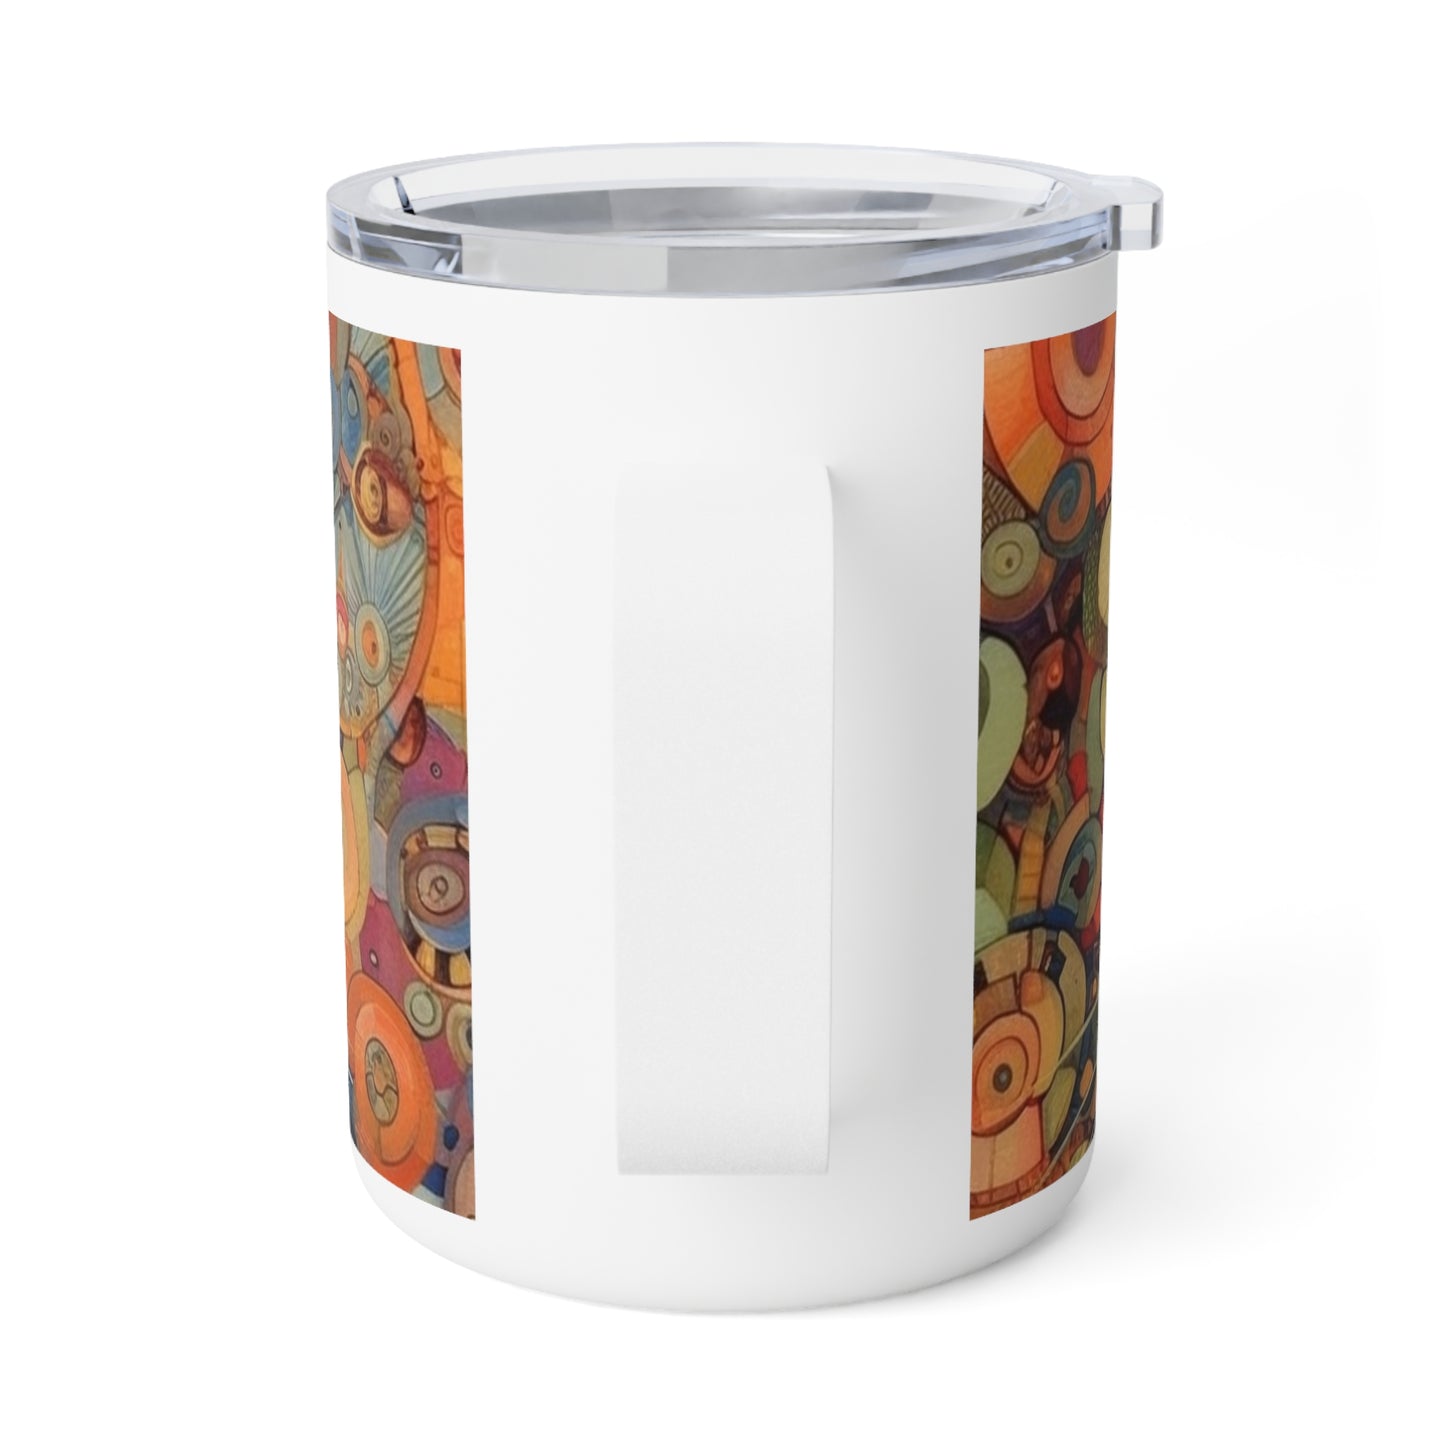 Art Nouveau Revival: Klimt-Inspired Insulated Coffee Mug